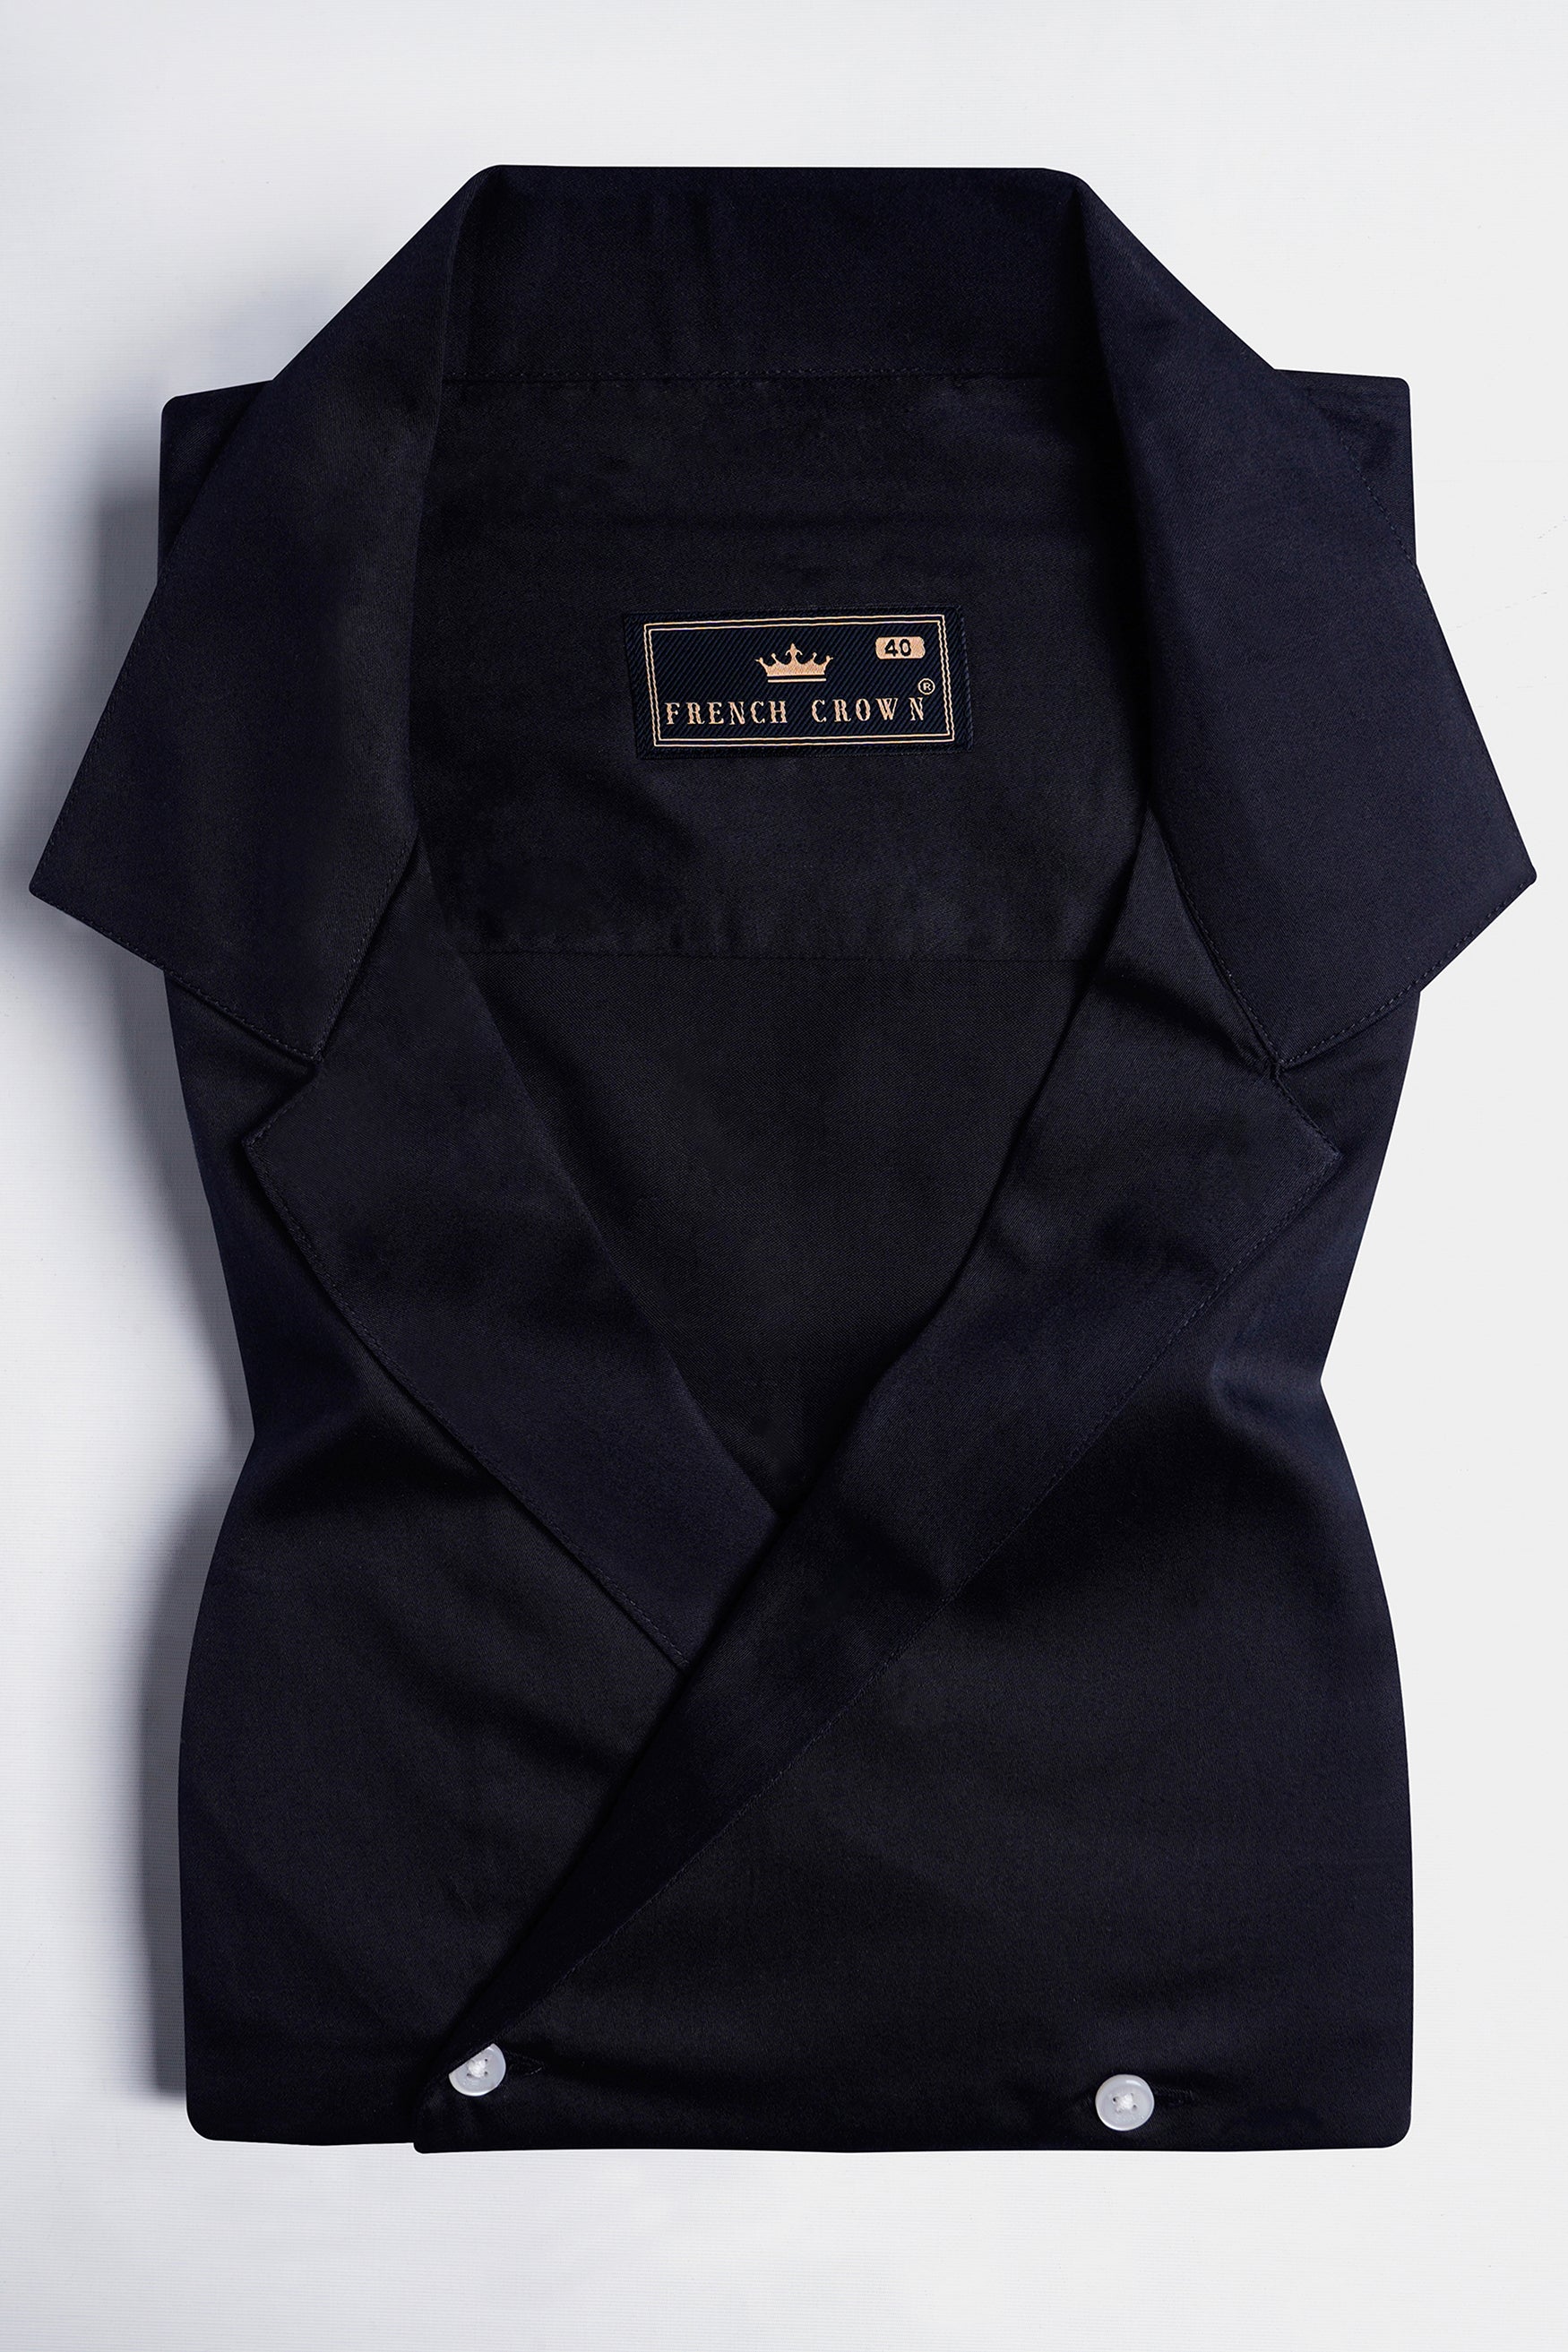 Jade Black Double-Breasted Premium Cotton Designer Shirt